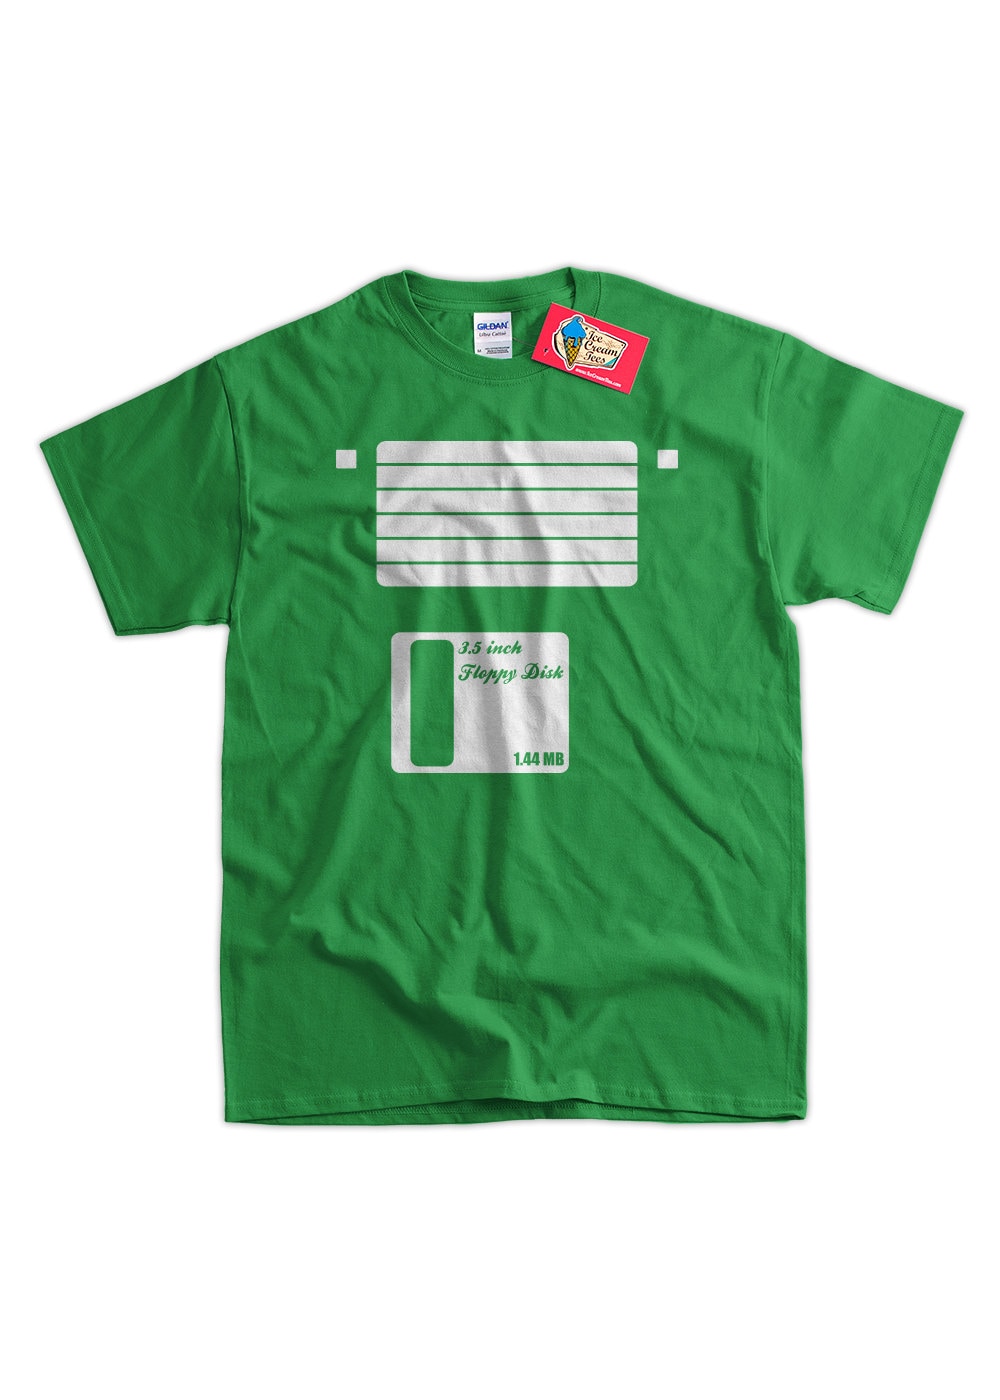 Floppy Disk Diskette Screen Printed T-shirt Tee Shirt T Shirt | Etsy